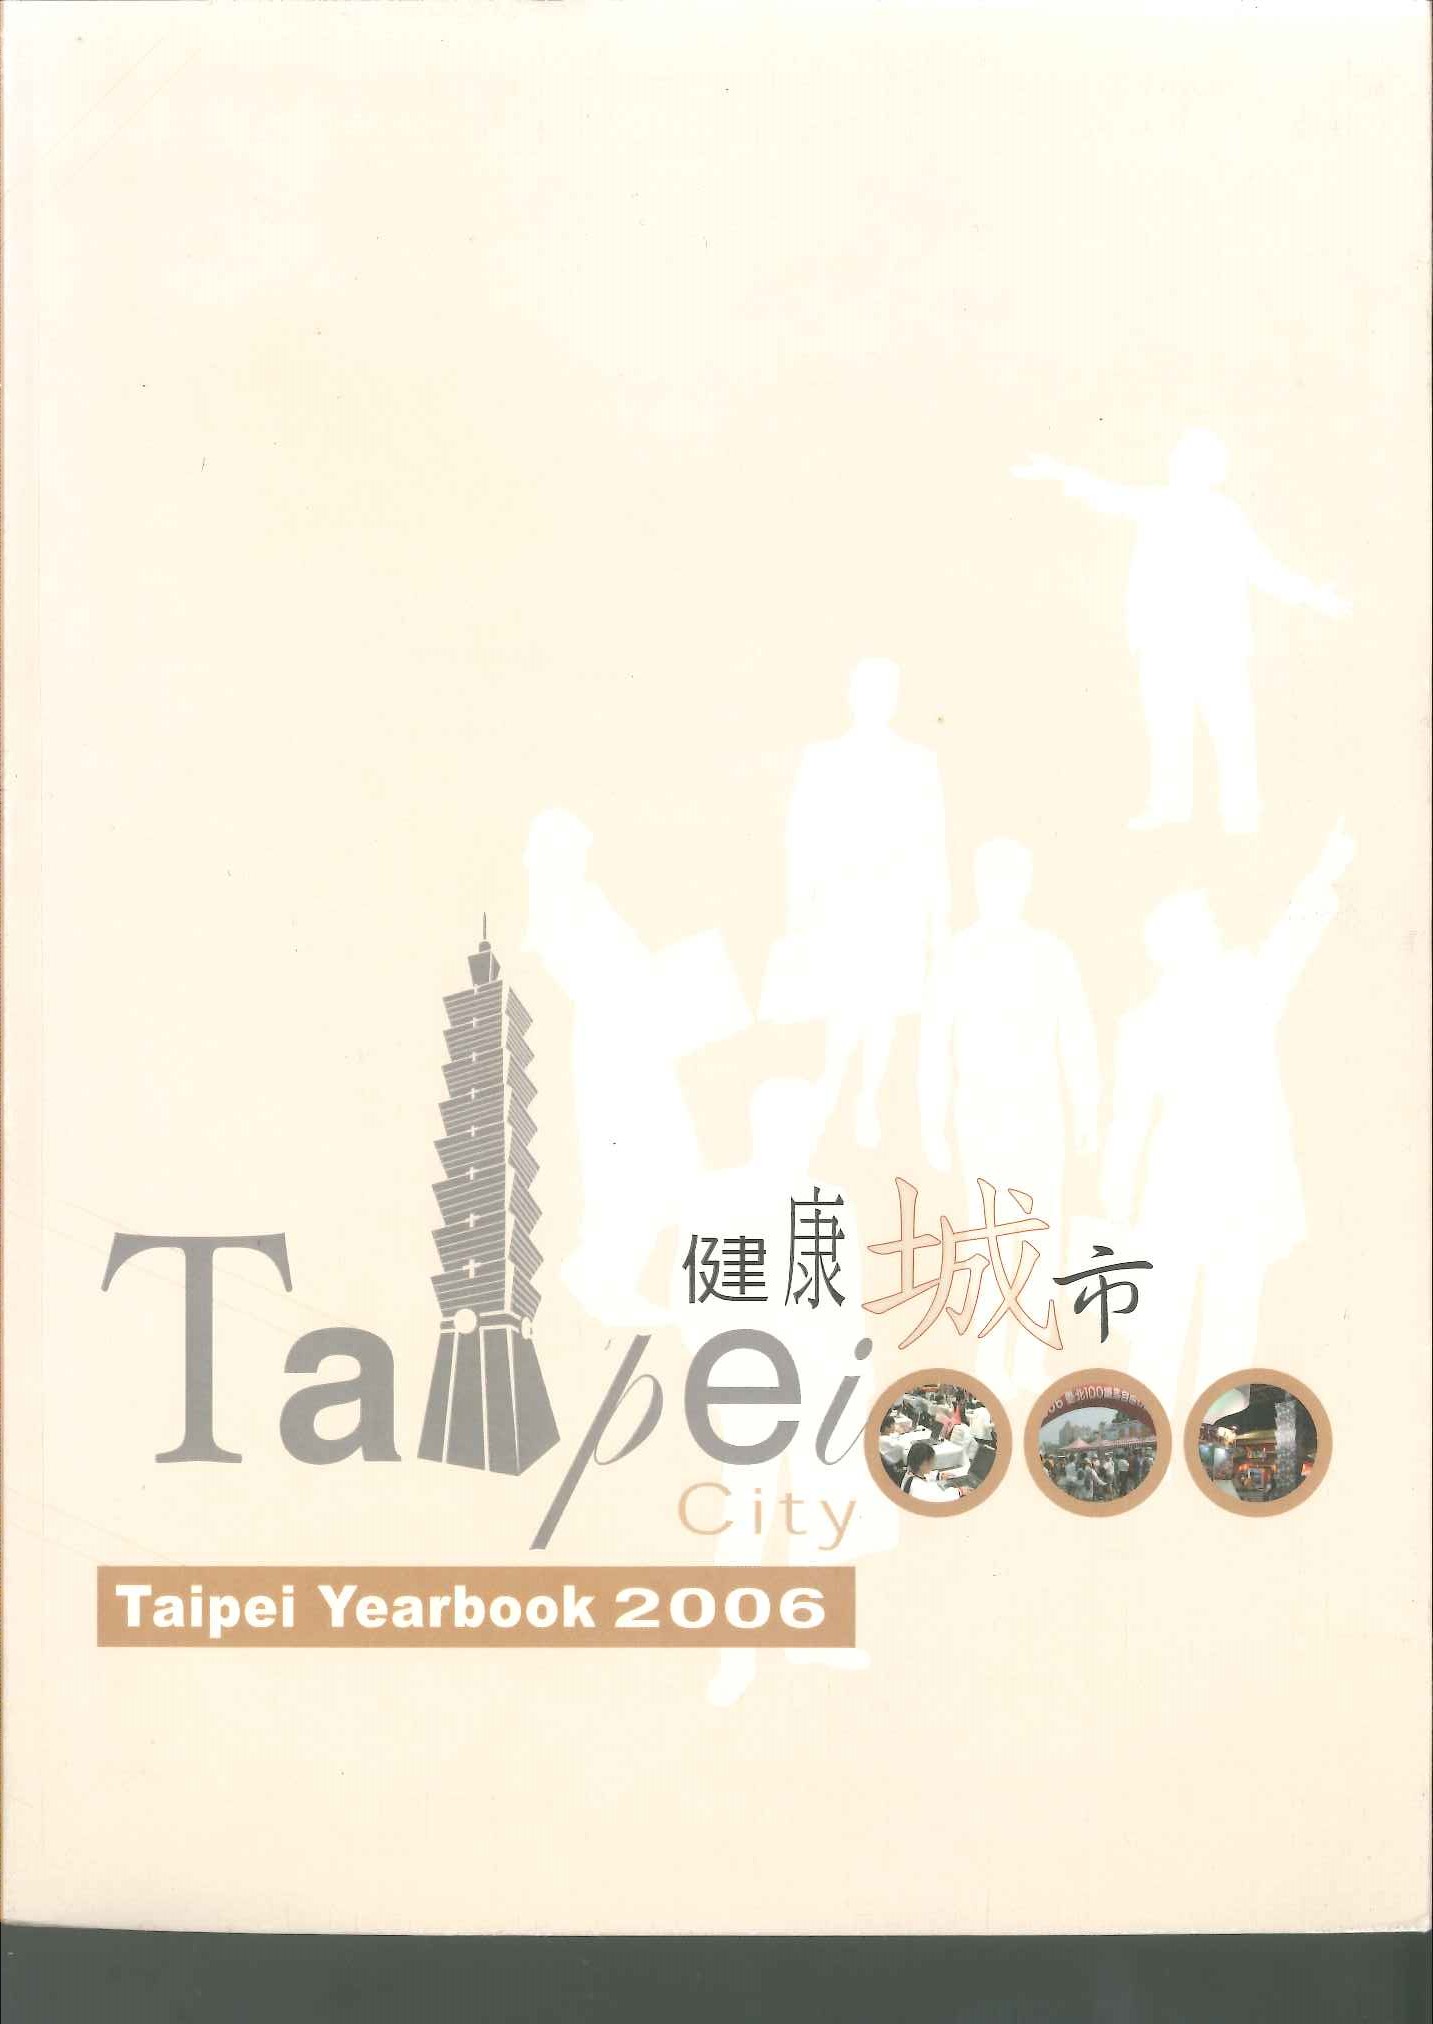 Taipei Yearbook 2006